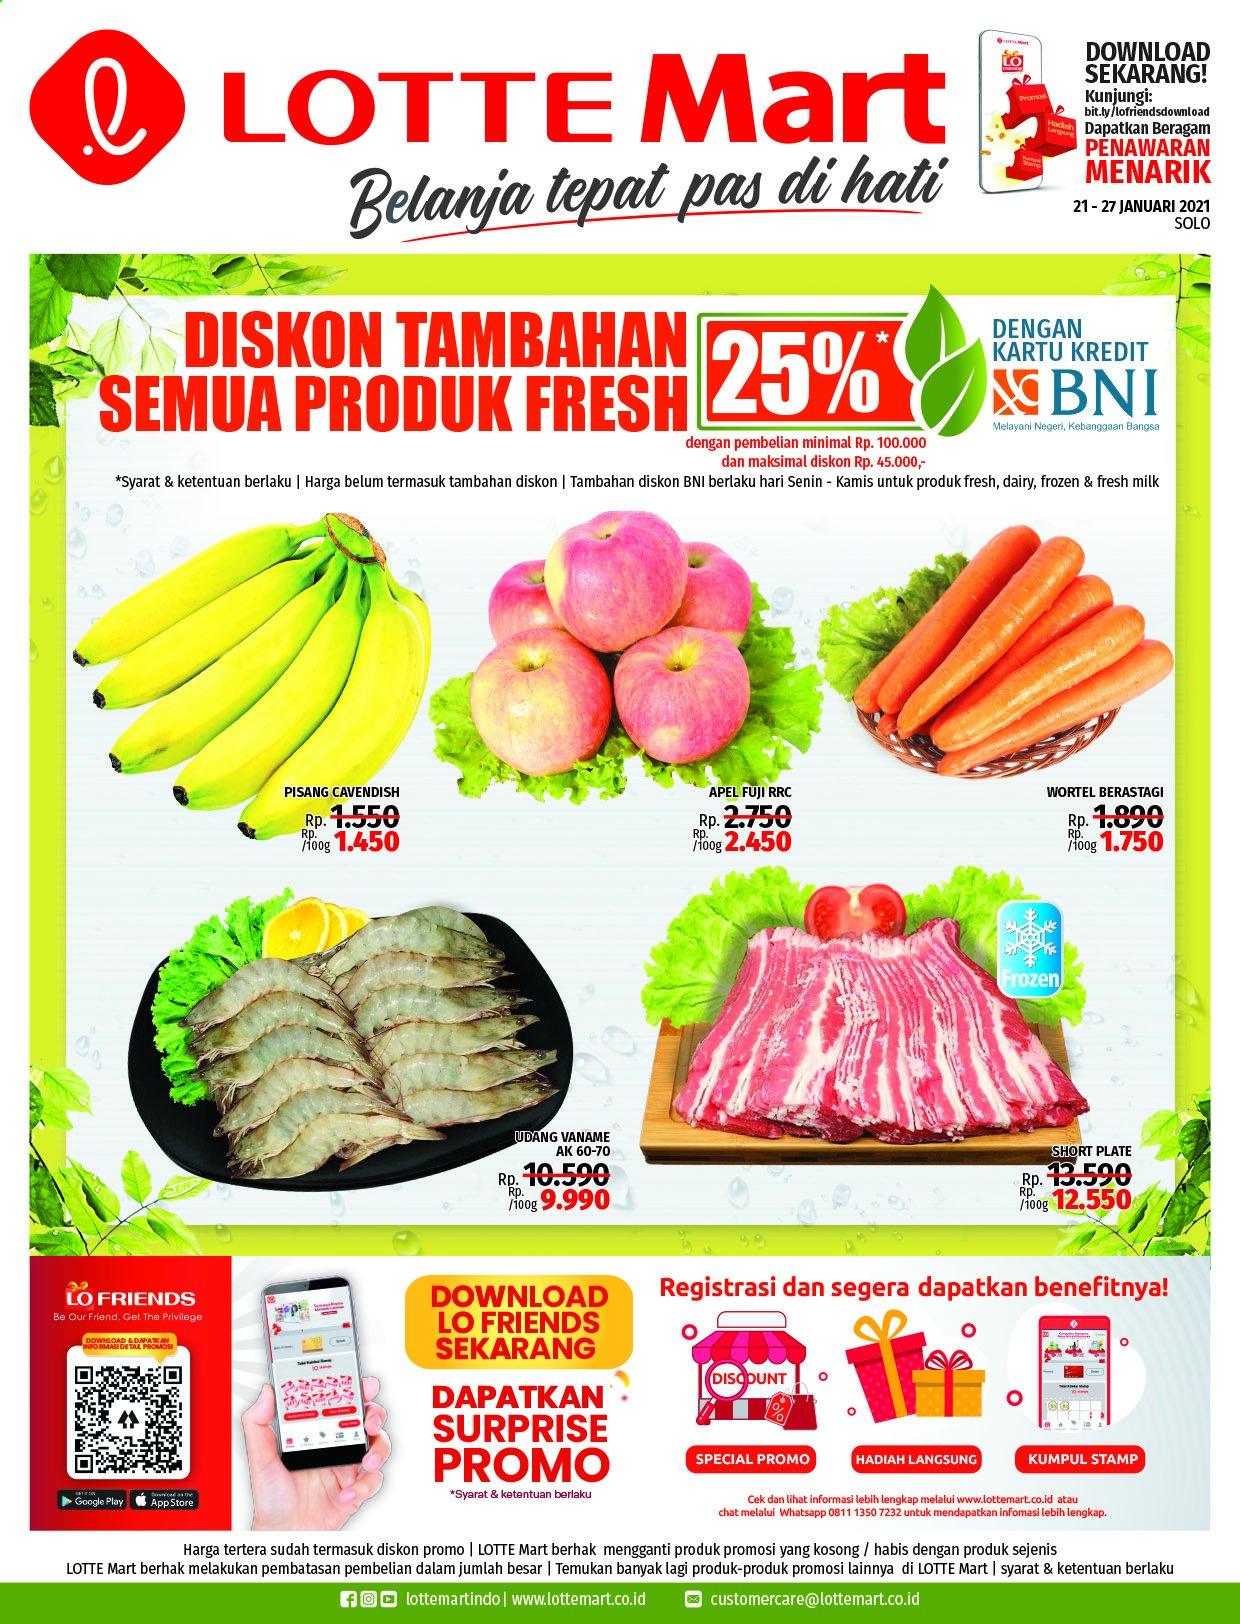 thumbnail - Promo LOTTE Mart - 01/21/2021 - 01/27/2021 - Produk diskon - milk, wortel, pisang, plate, frozen, apel. Halaman 1.